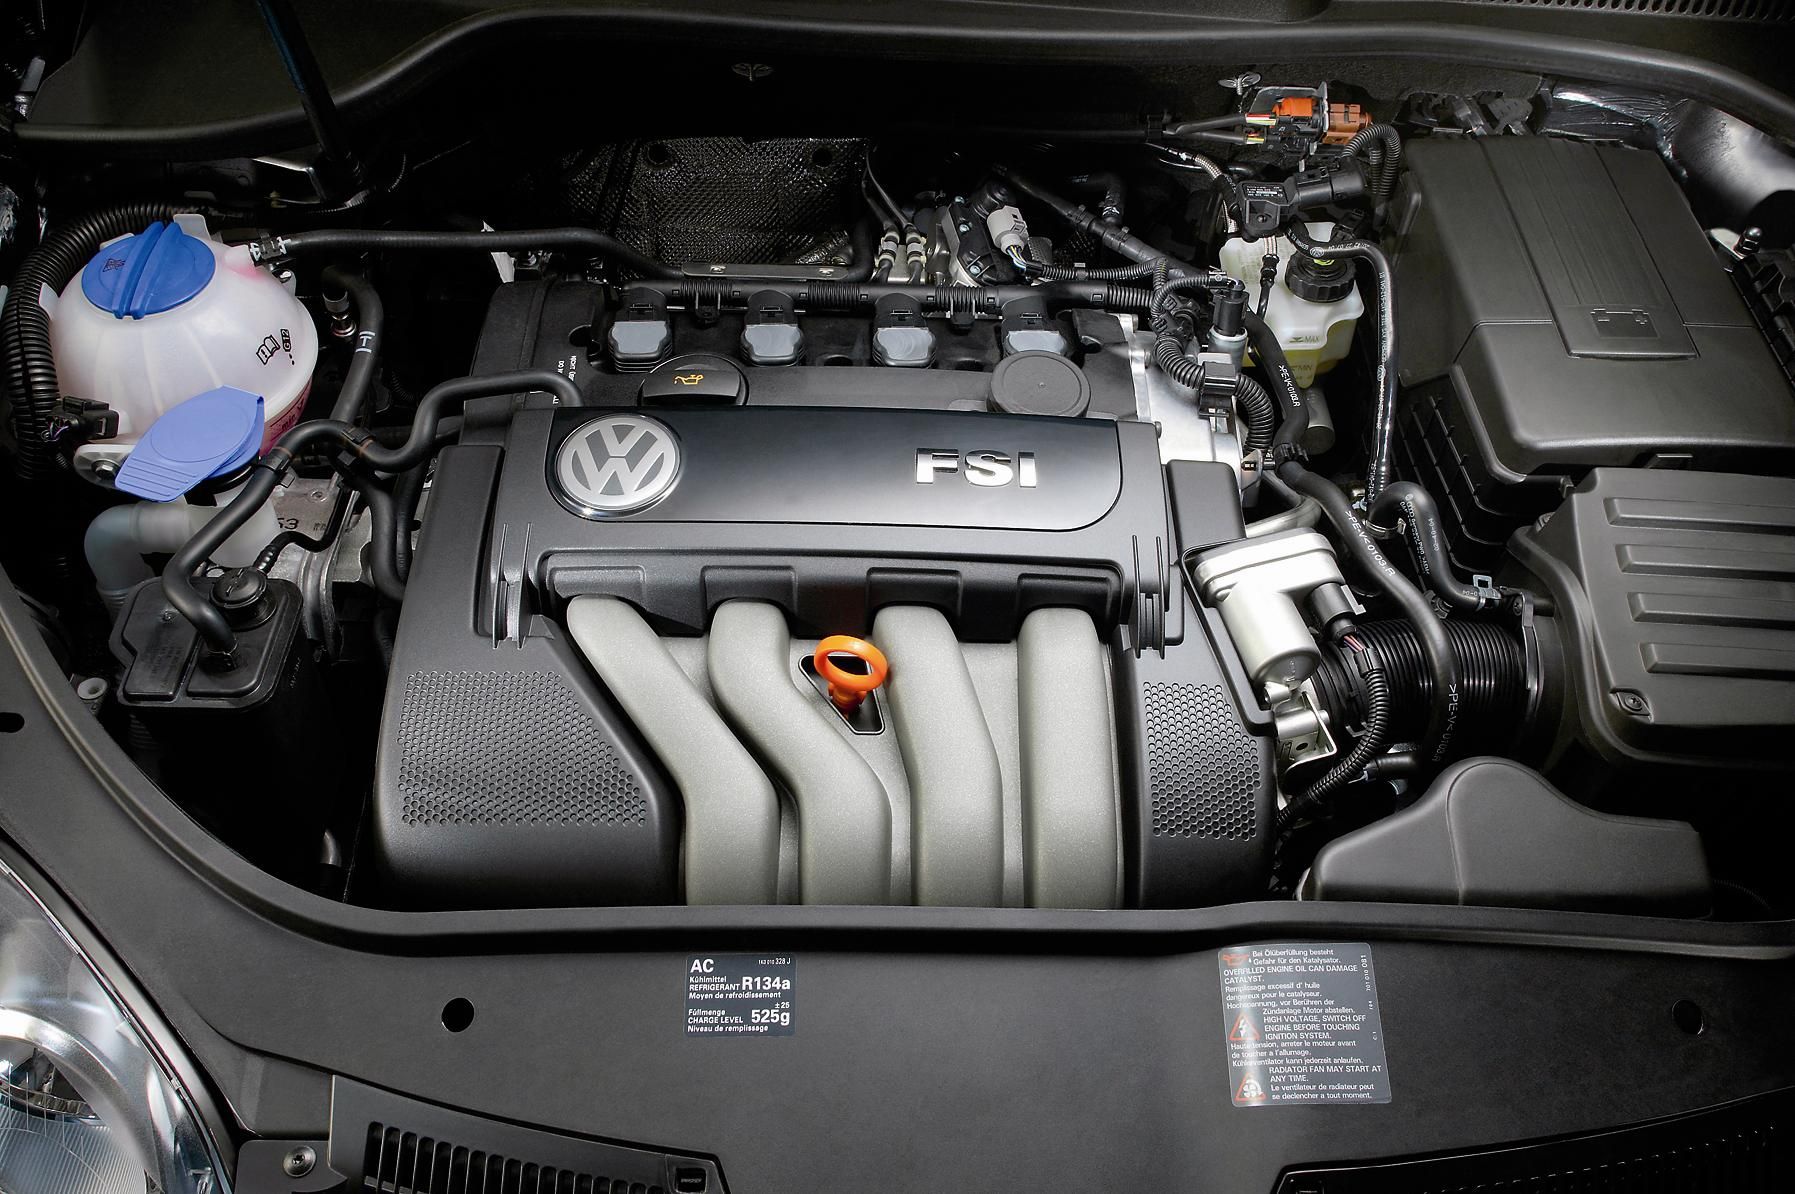 2.2 л 150 л с дизель. Jetta 2006 мотор. VW Jetta 2010 1.6 двигатель. Двигатель Фольксваген Джетта 5. Двигатель Фольксваген Пассат б6.